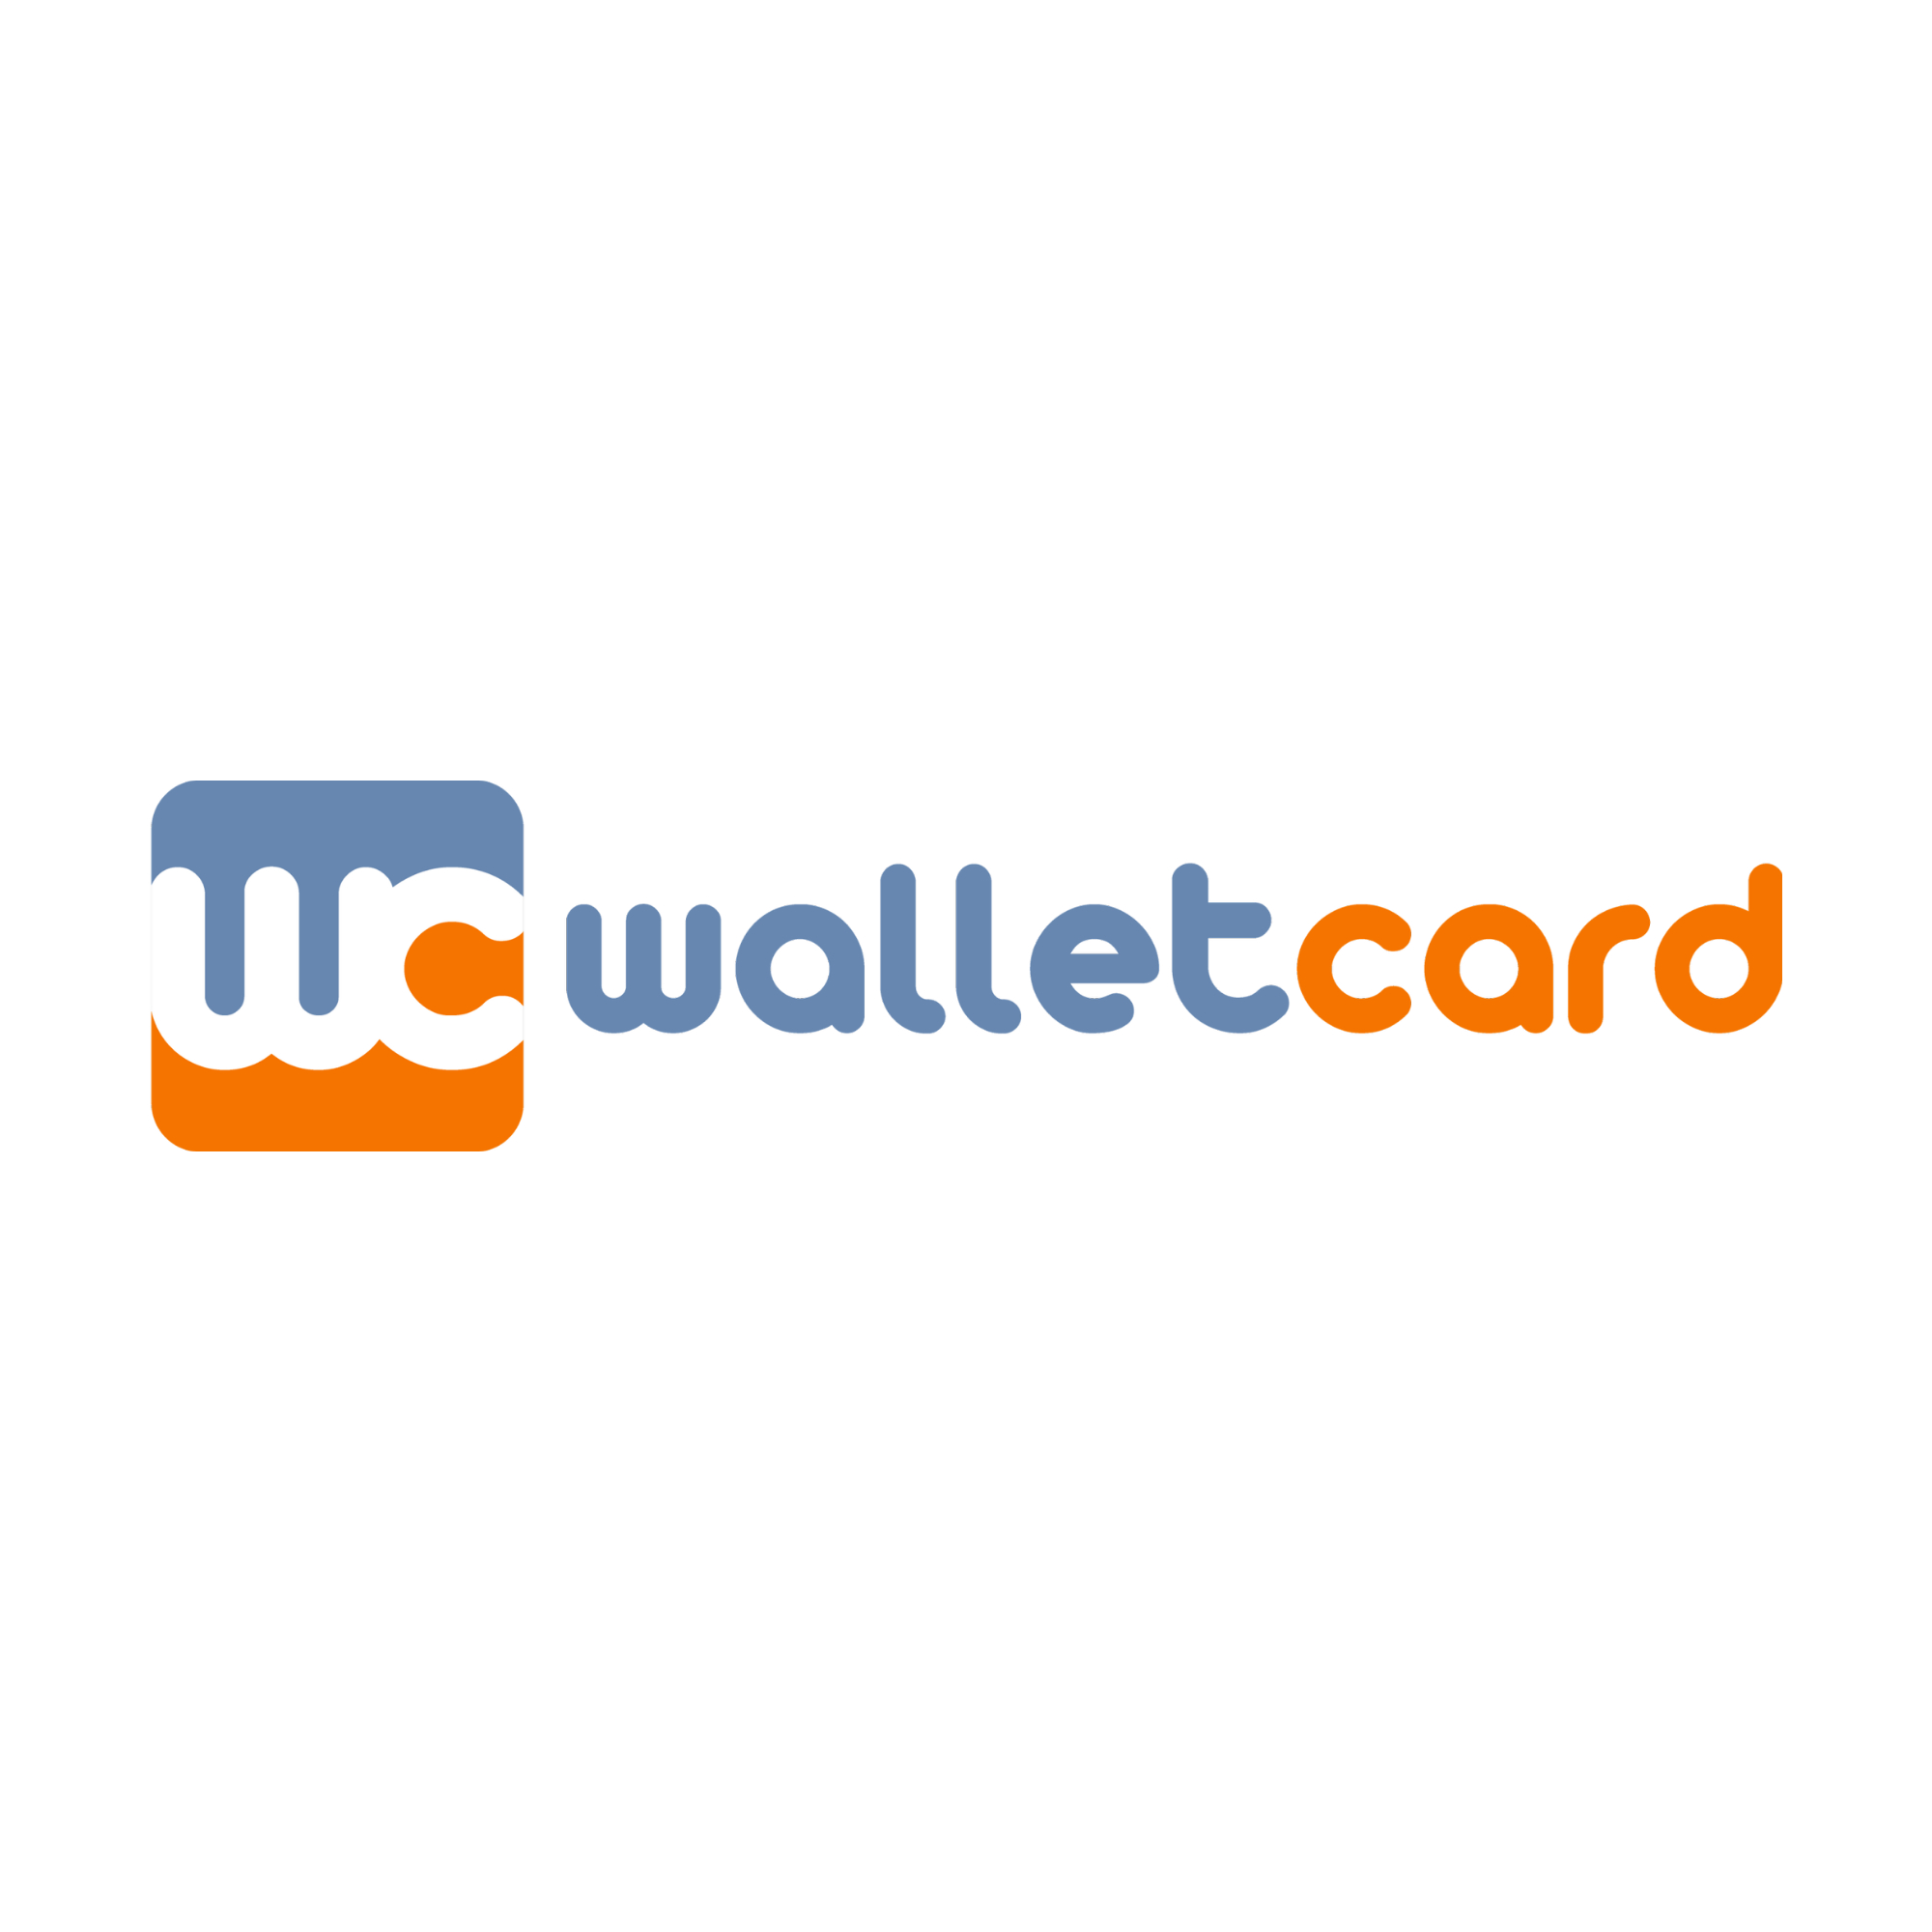 WalletCard